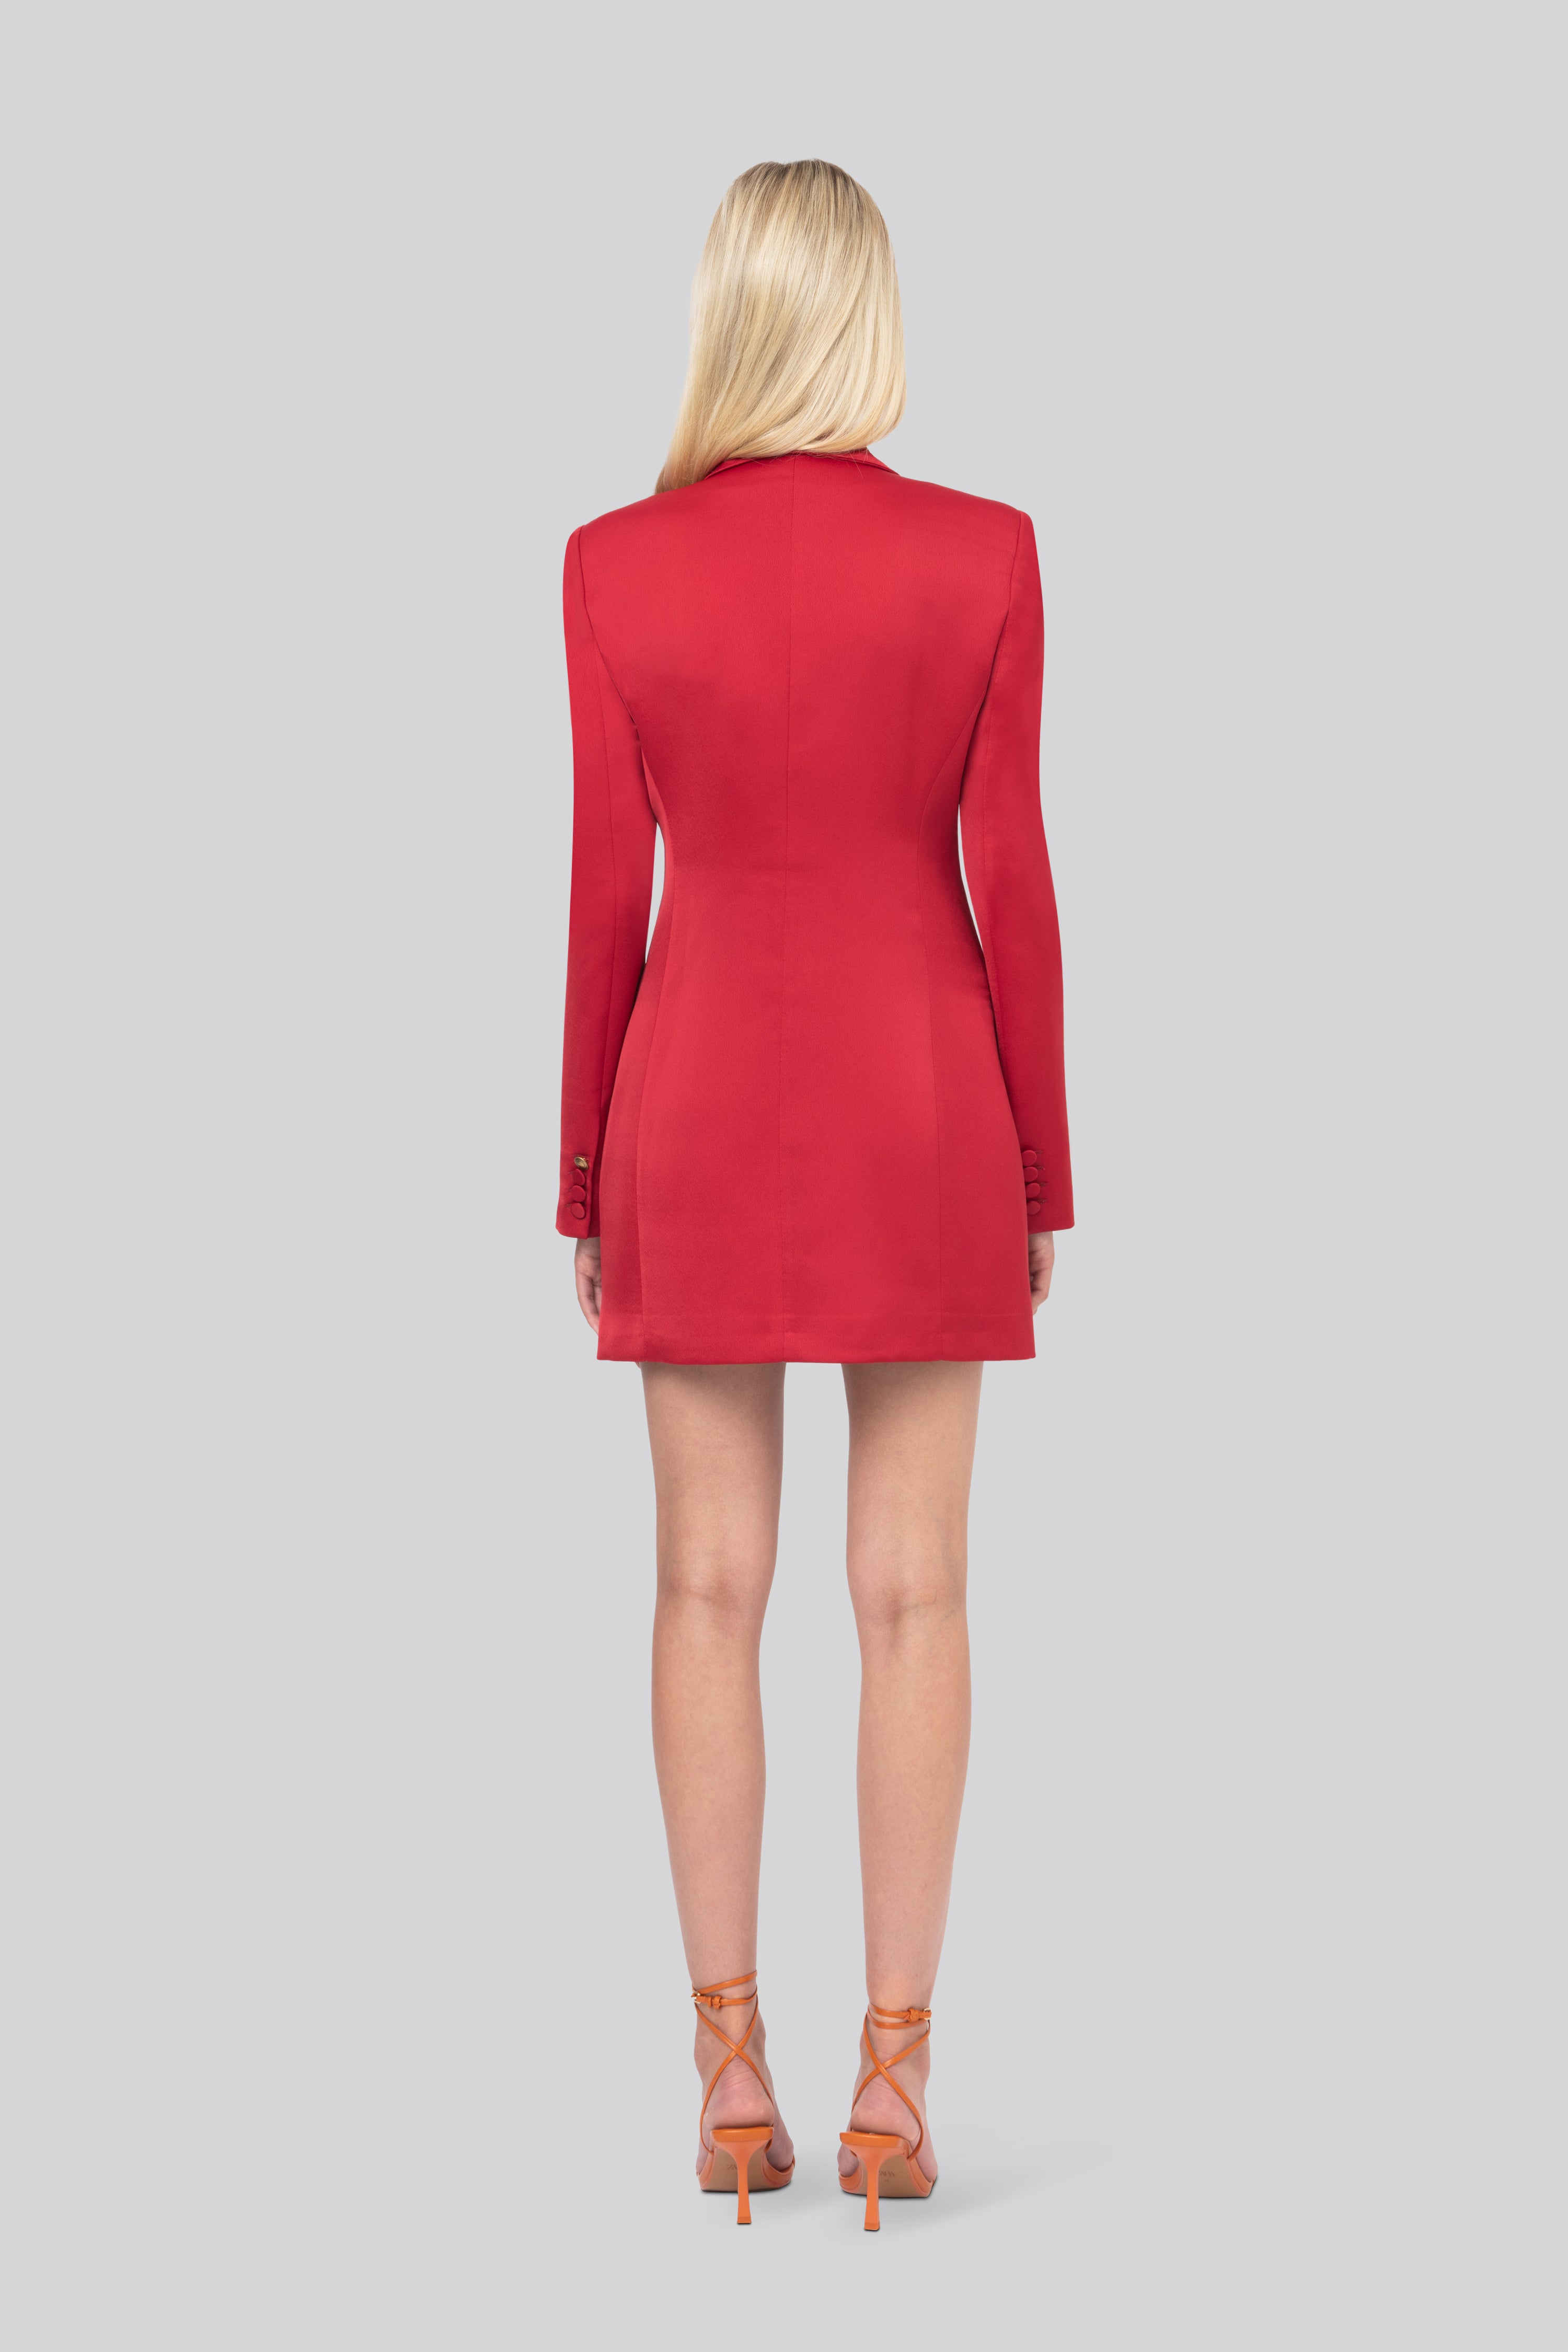 The Red Satin Bianca Dress